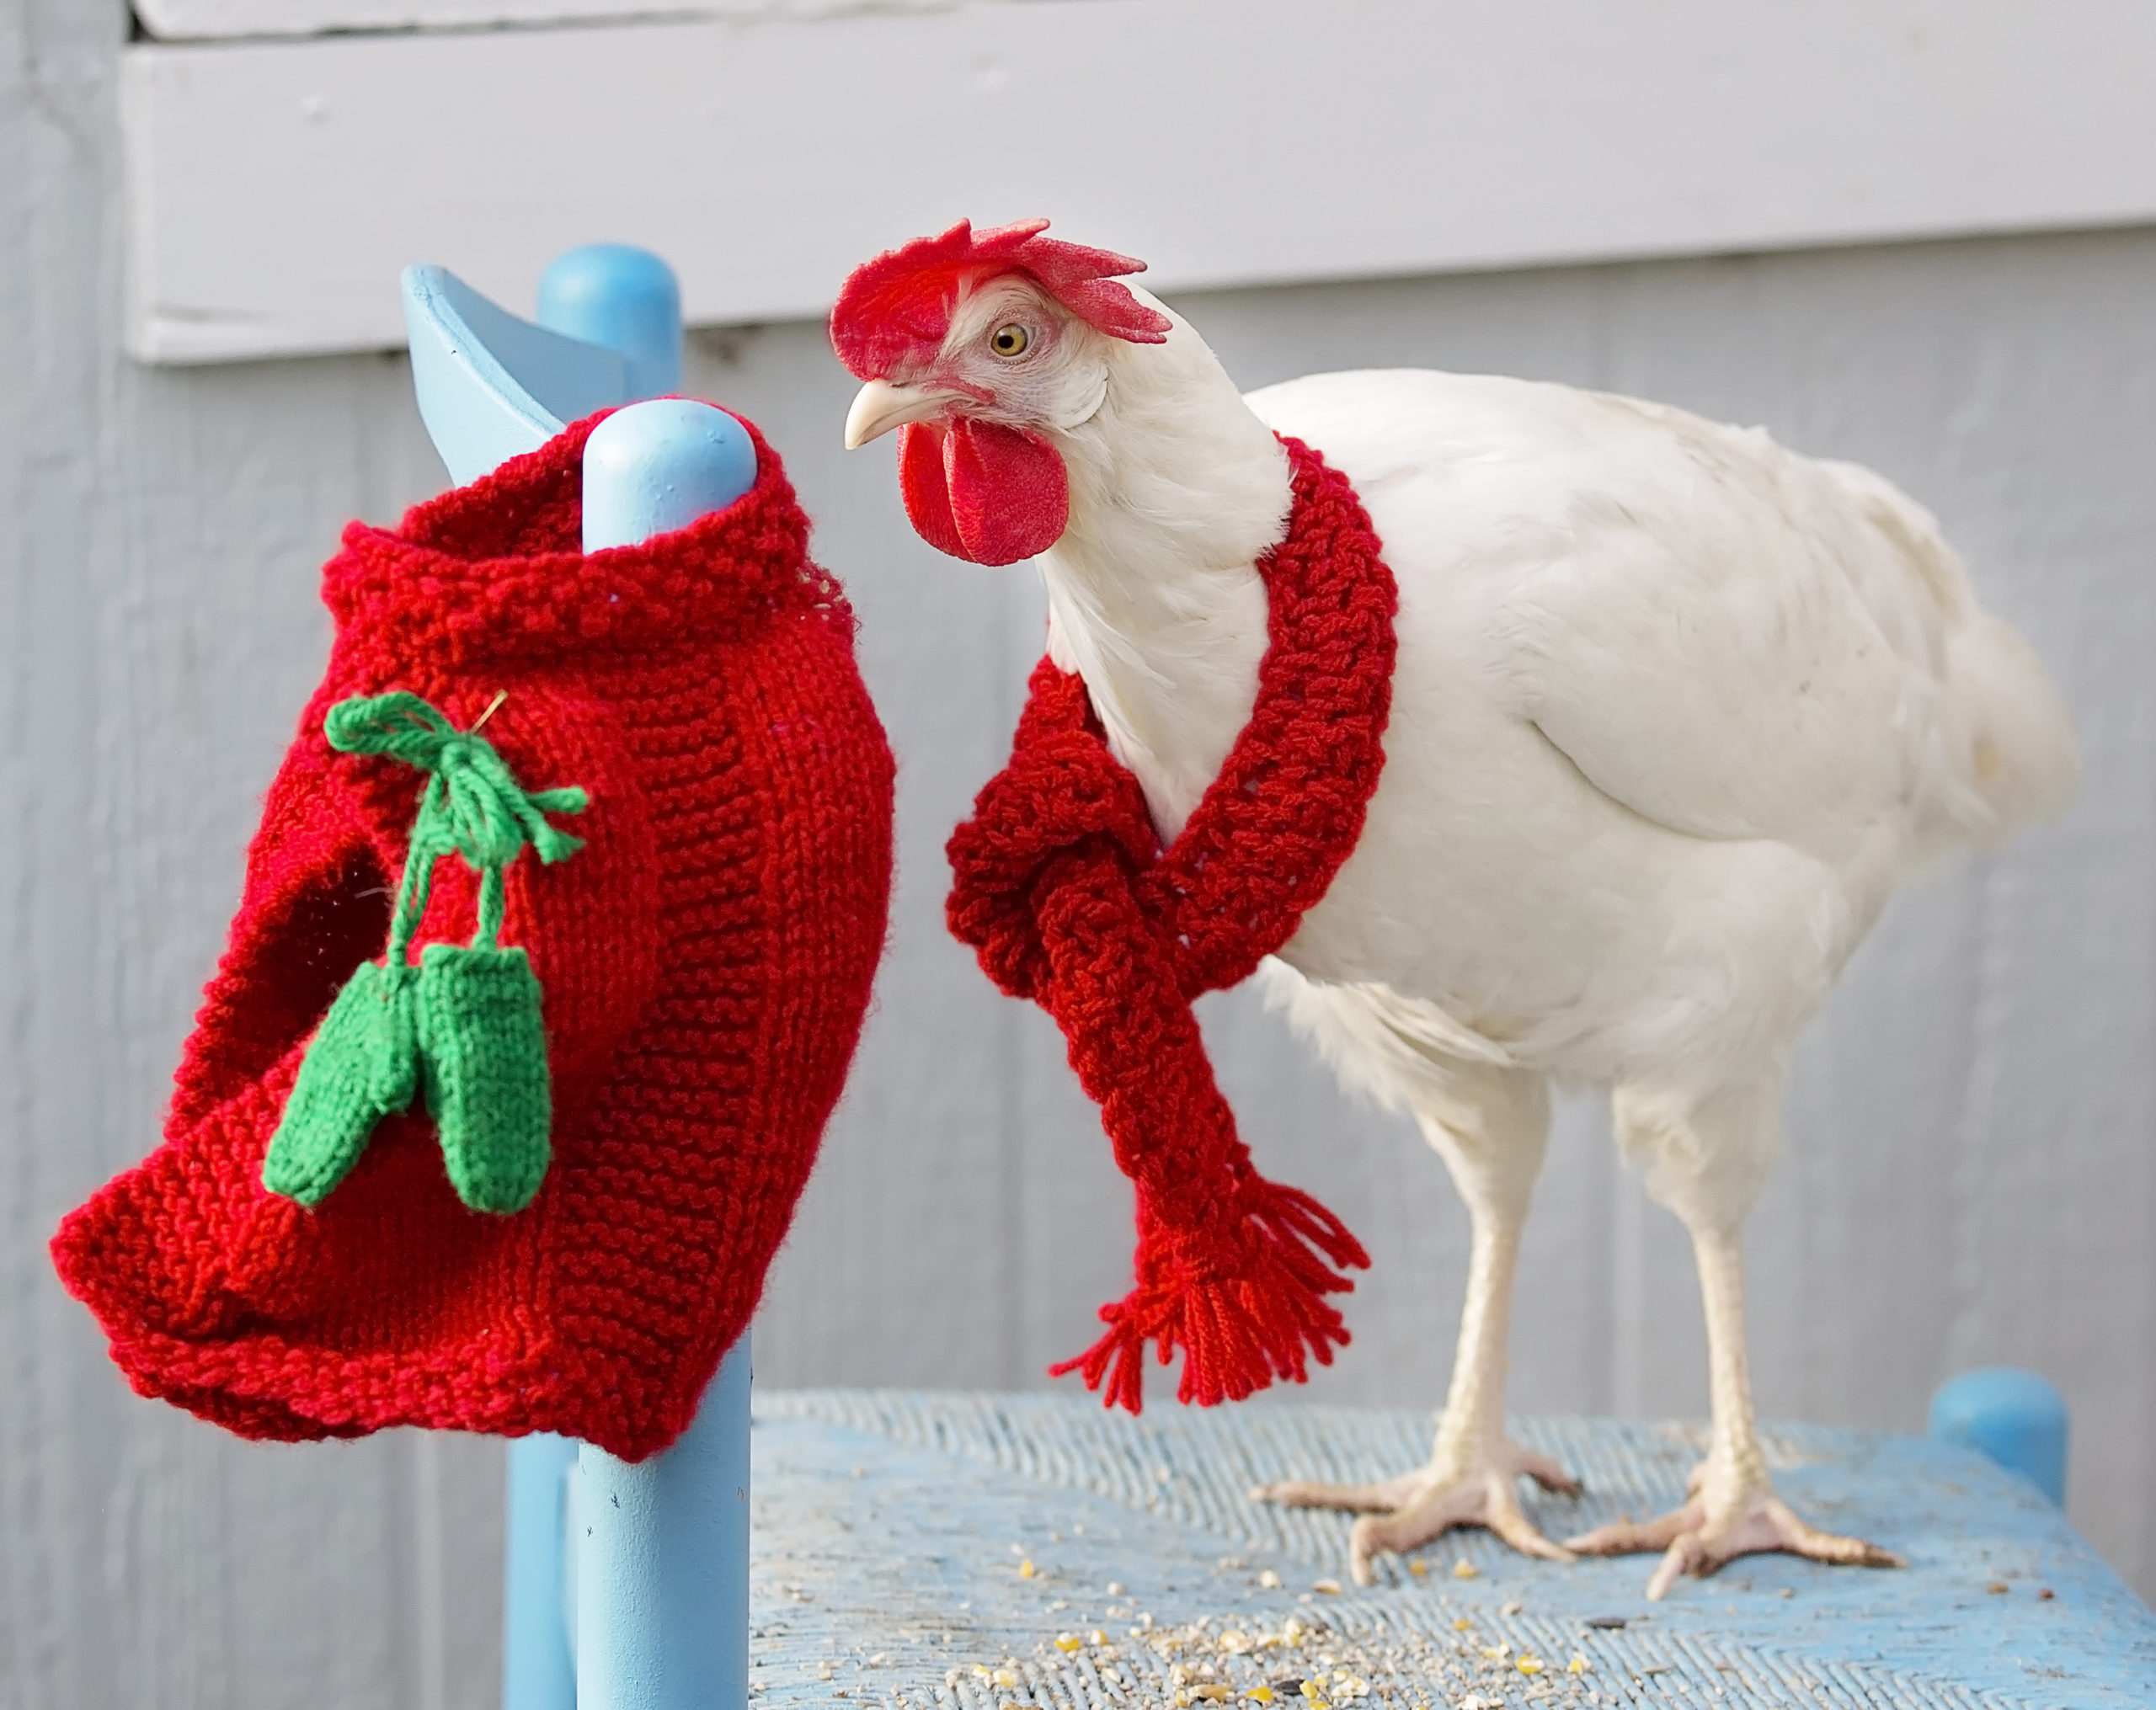 Leghorn hen in a scarf